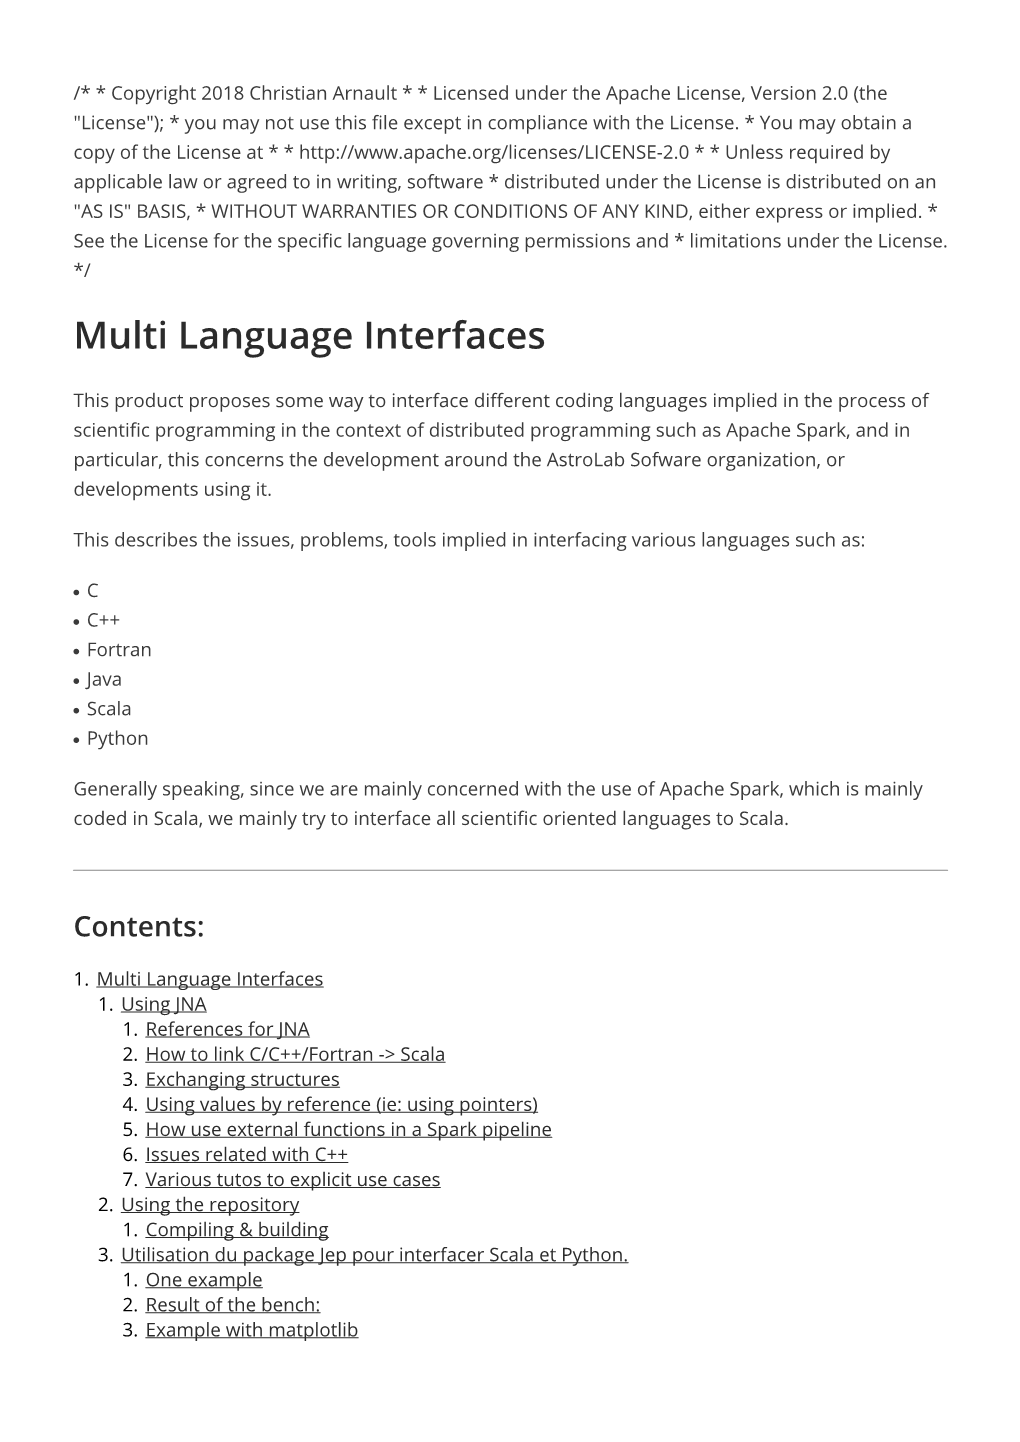 Multi Language Interfaces